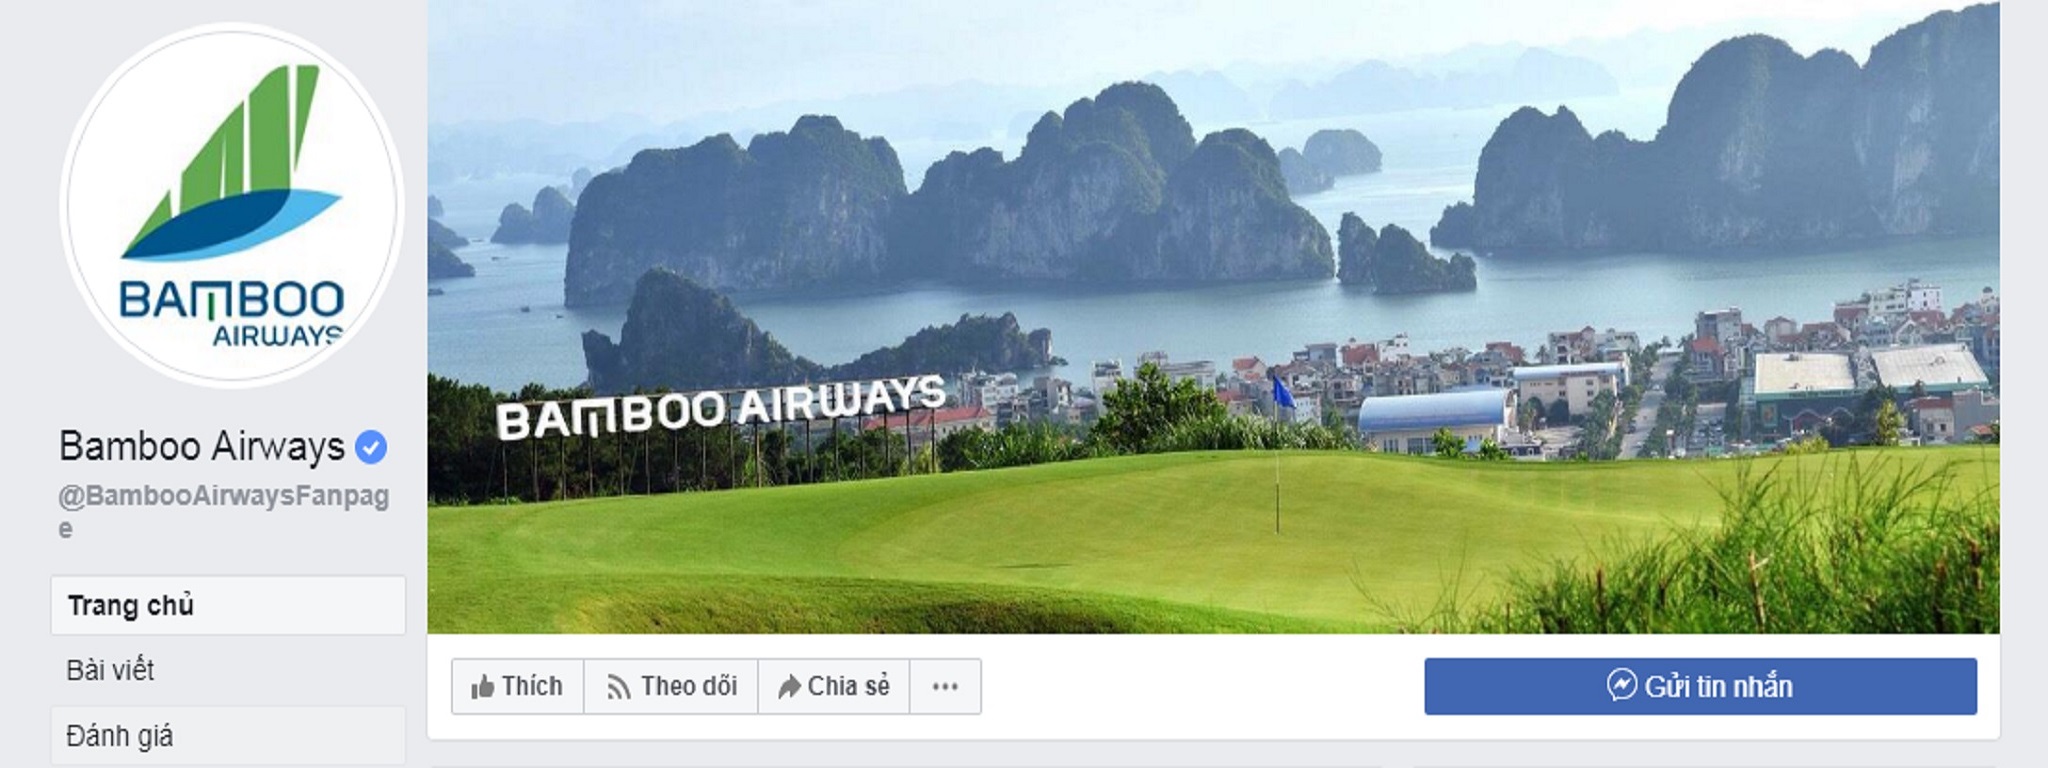 Hình ảnh fanpage facebook của Bamboo Airways